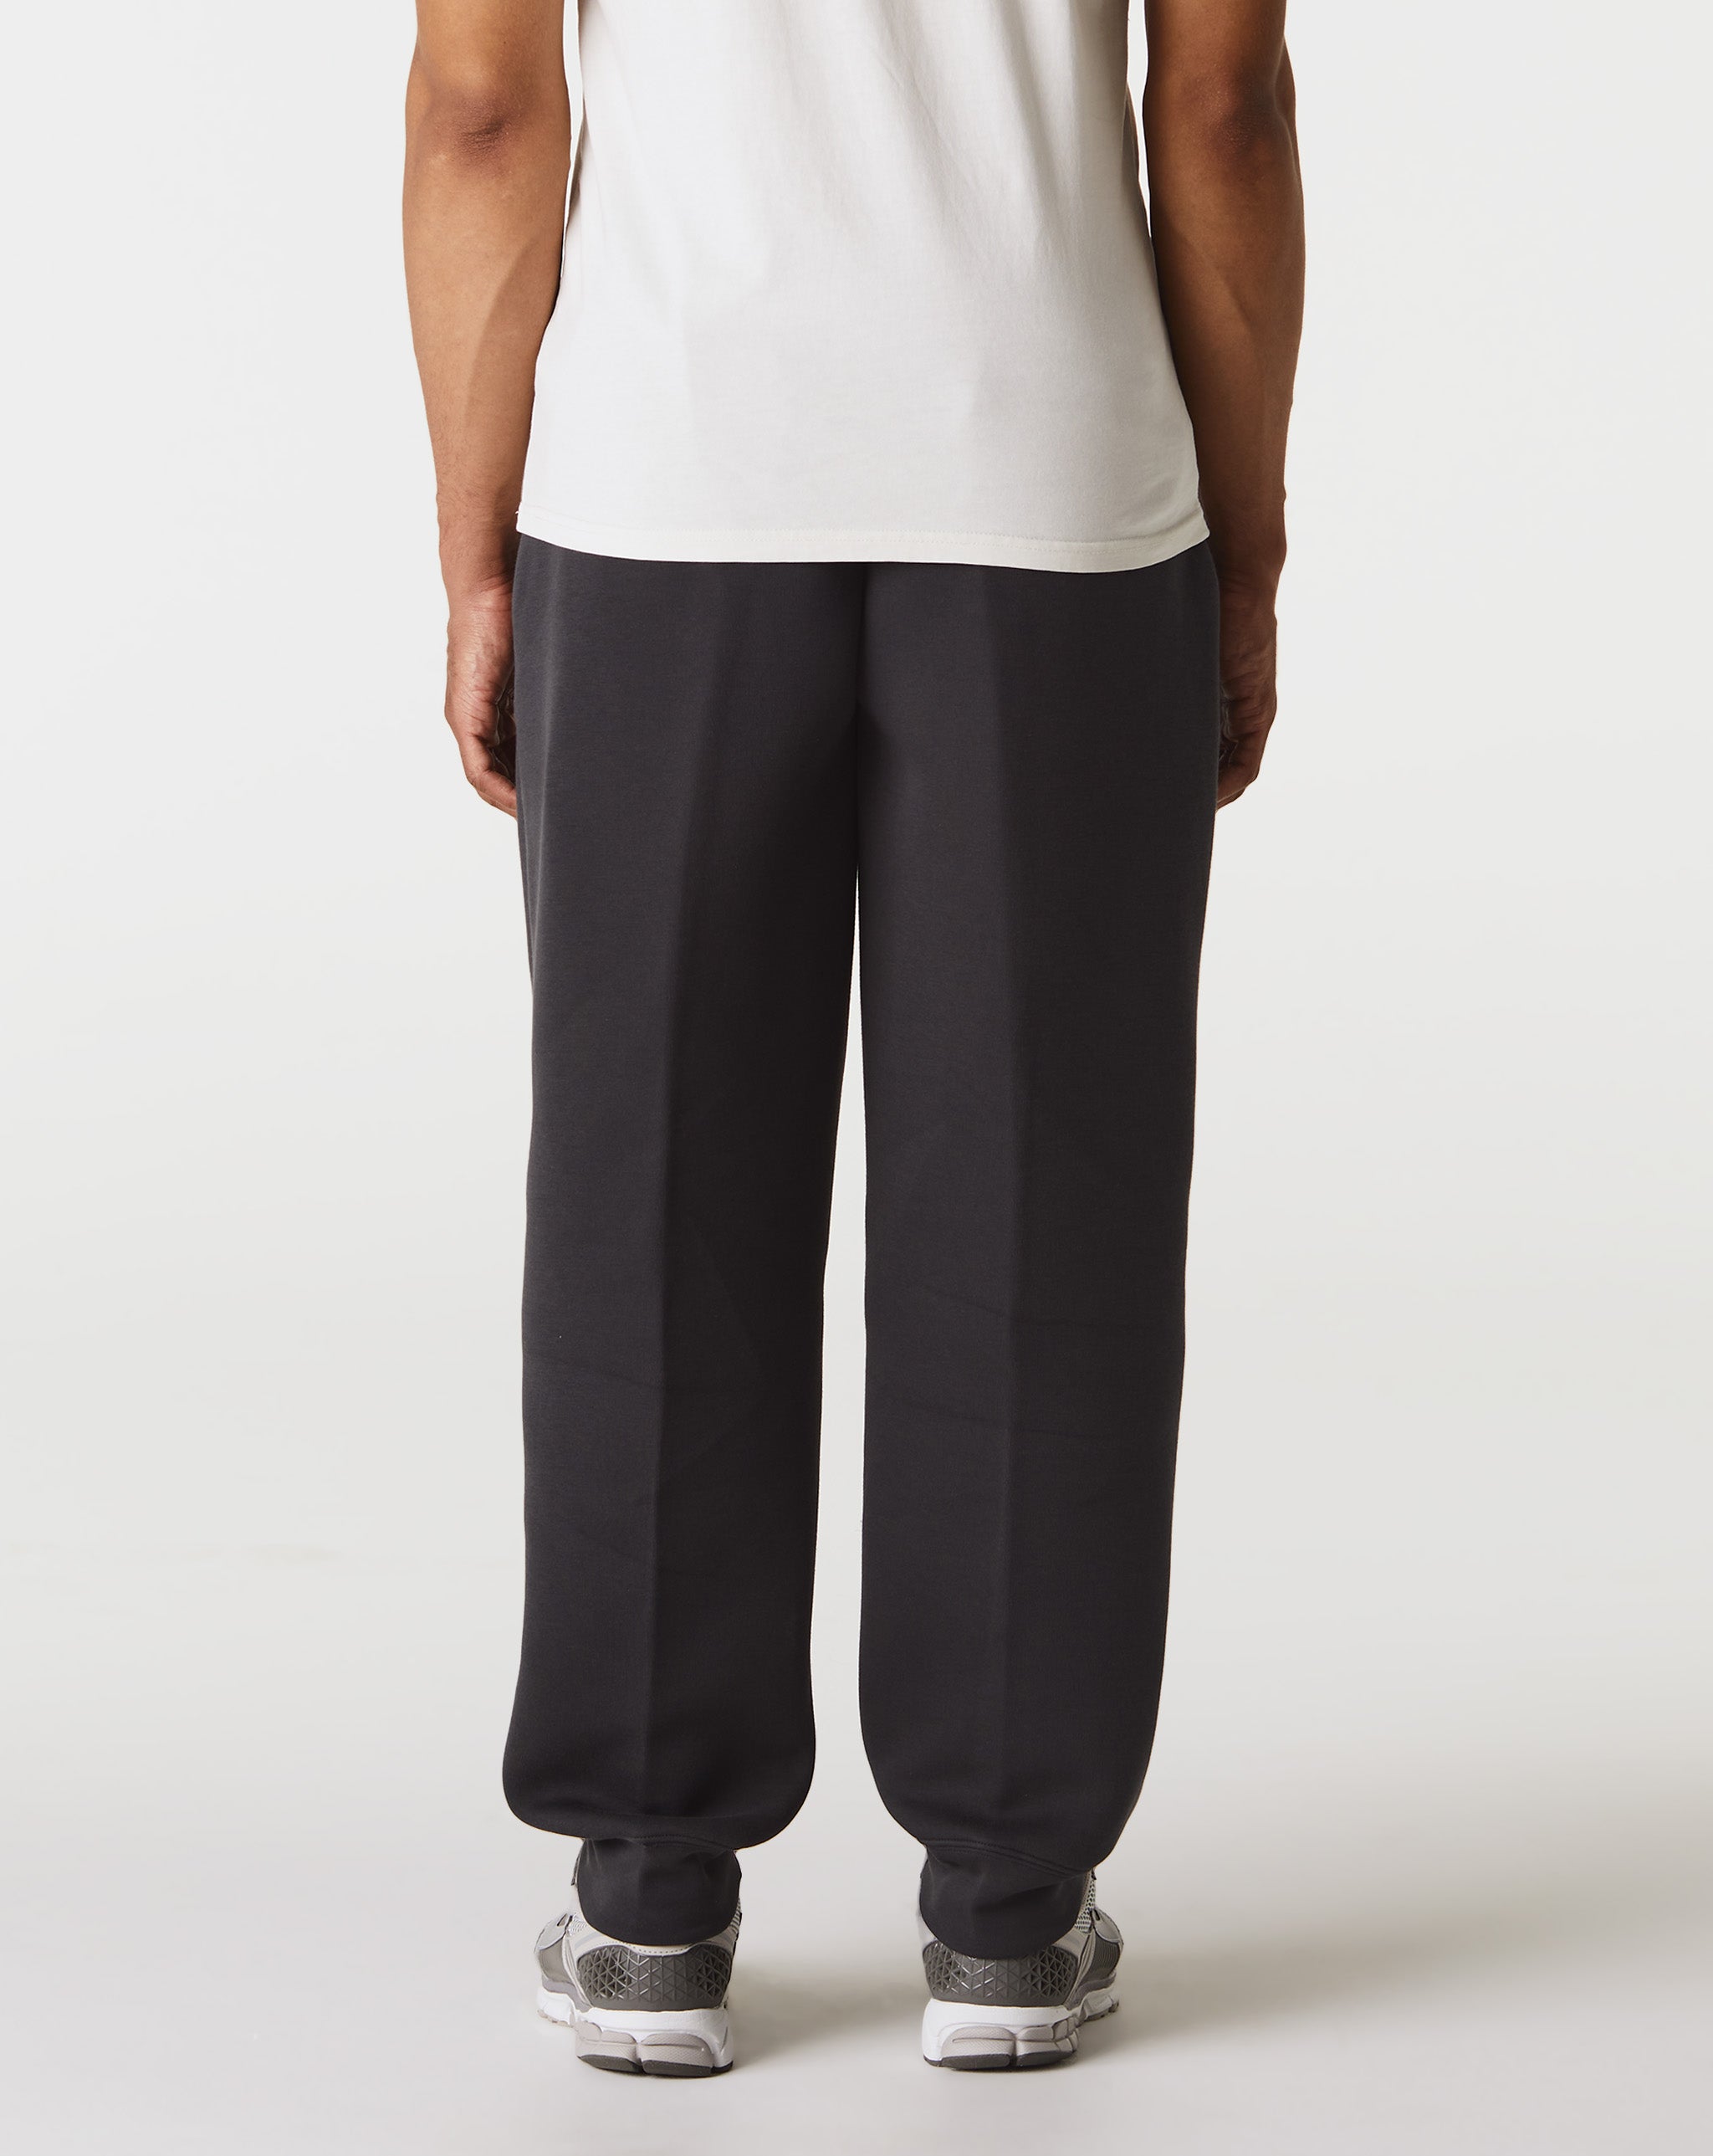 Nike Durban Tailored Pants  - Cheap Cerbe Jordan outlet